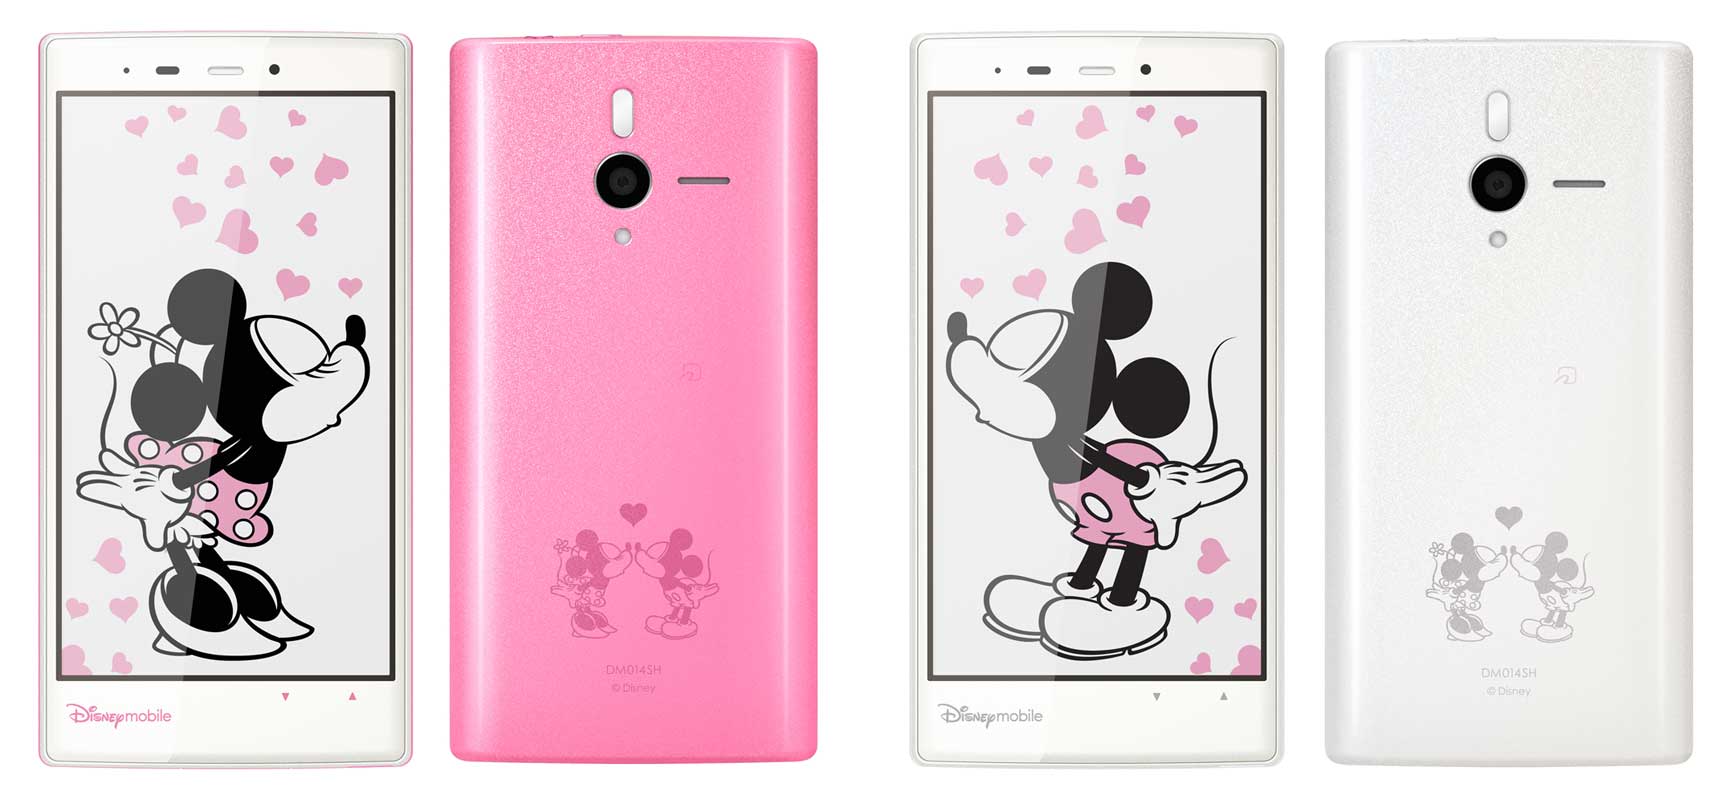 4G対応で機能向上、ミッキーとミニーをモチーフにした「Disney Mobile ...